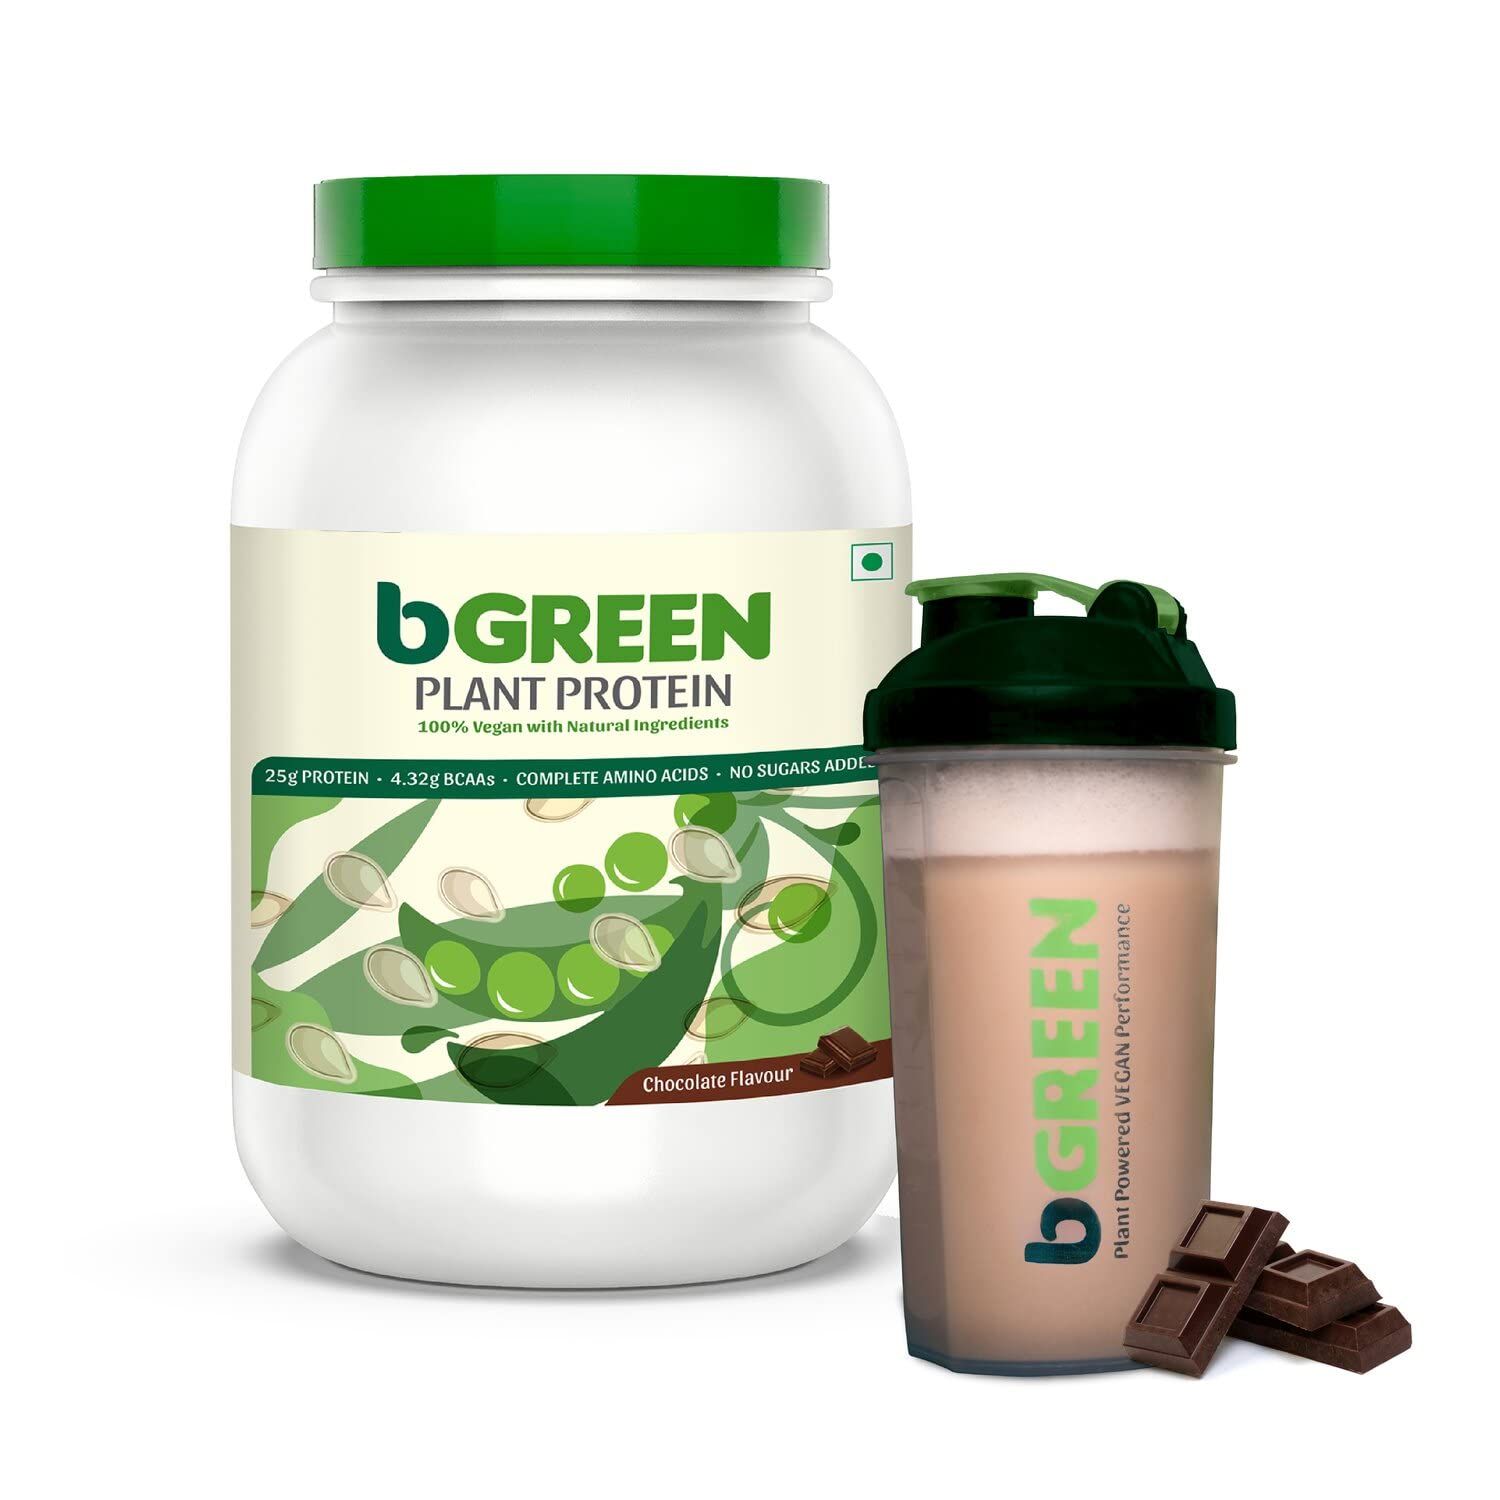 bGREEN by HealthKart Vegan Plant Protein Powder Image